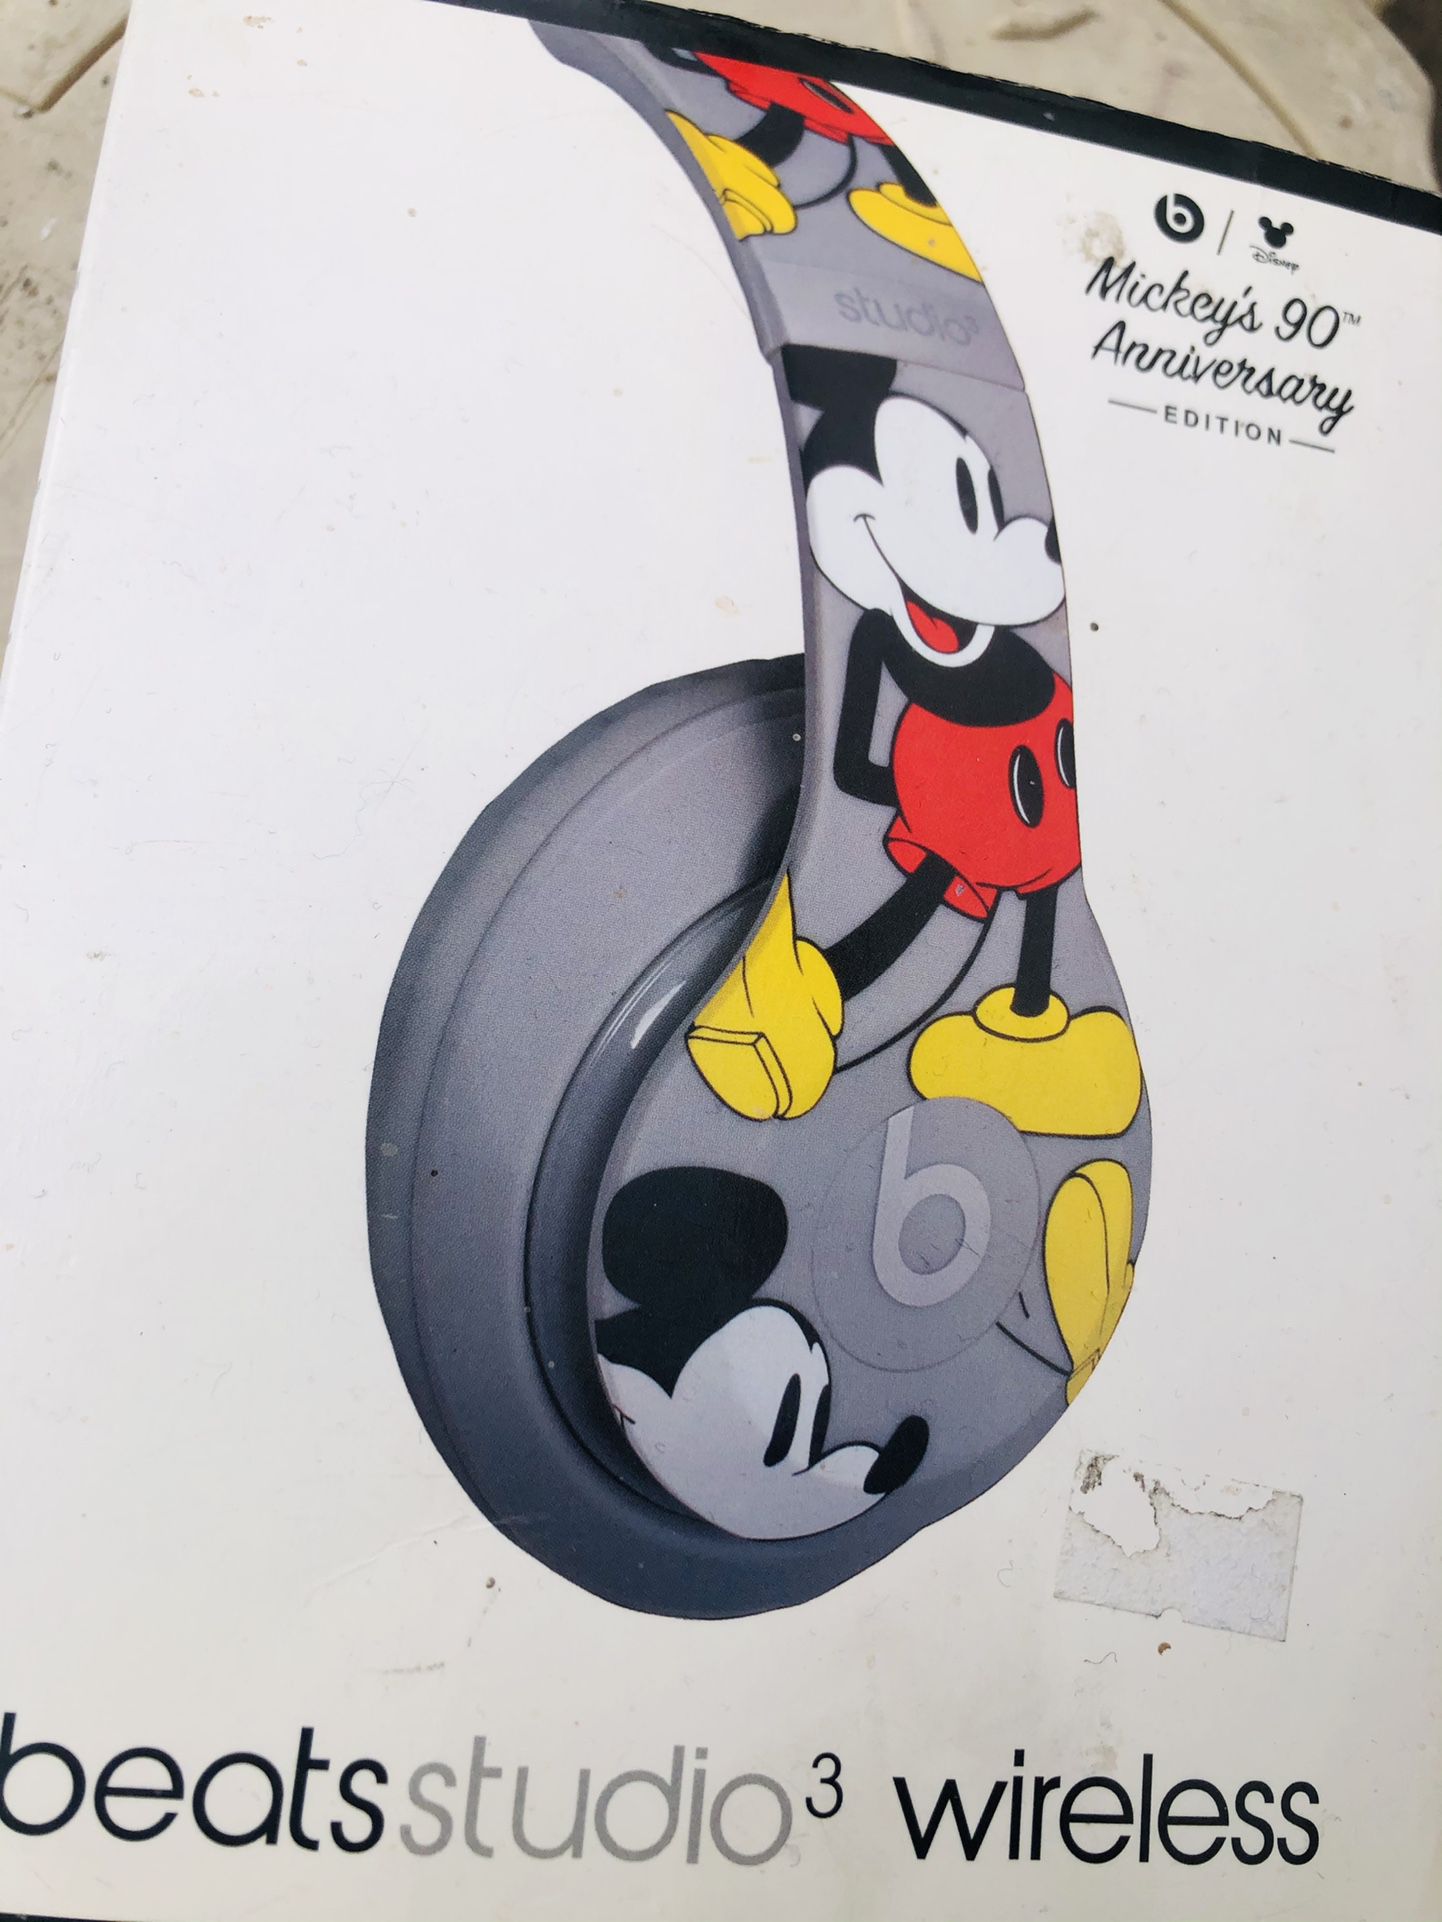 Beats studio 3 Mickeys 90 Anniversary Edition